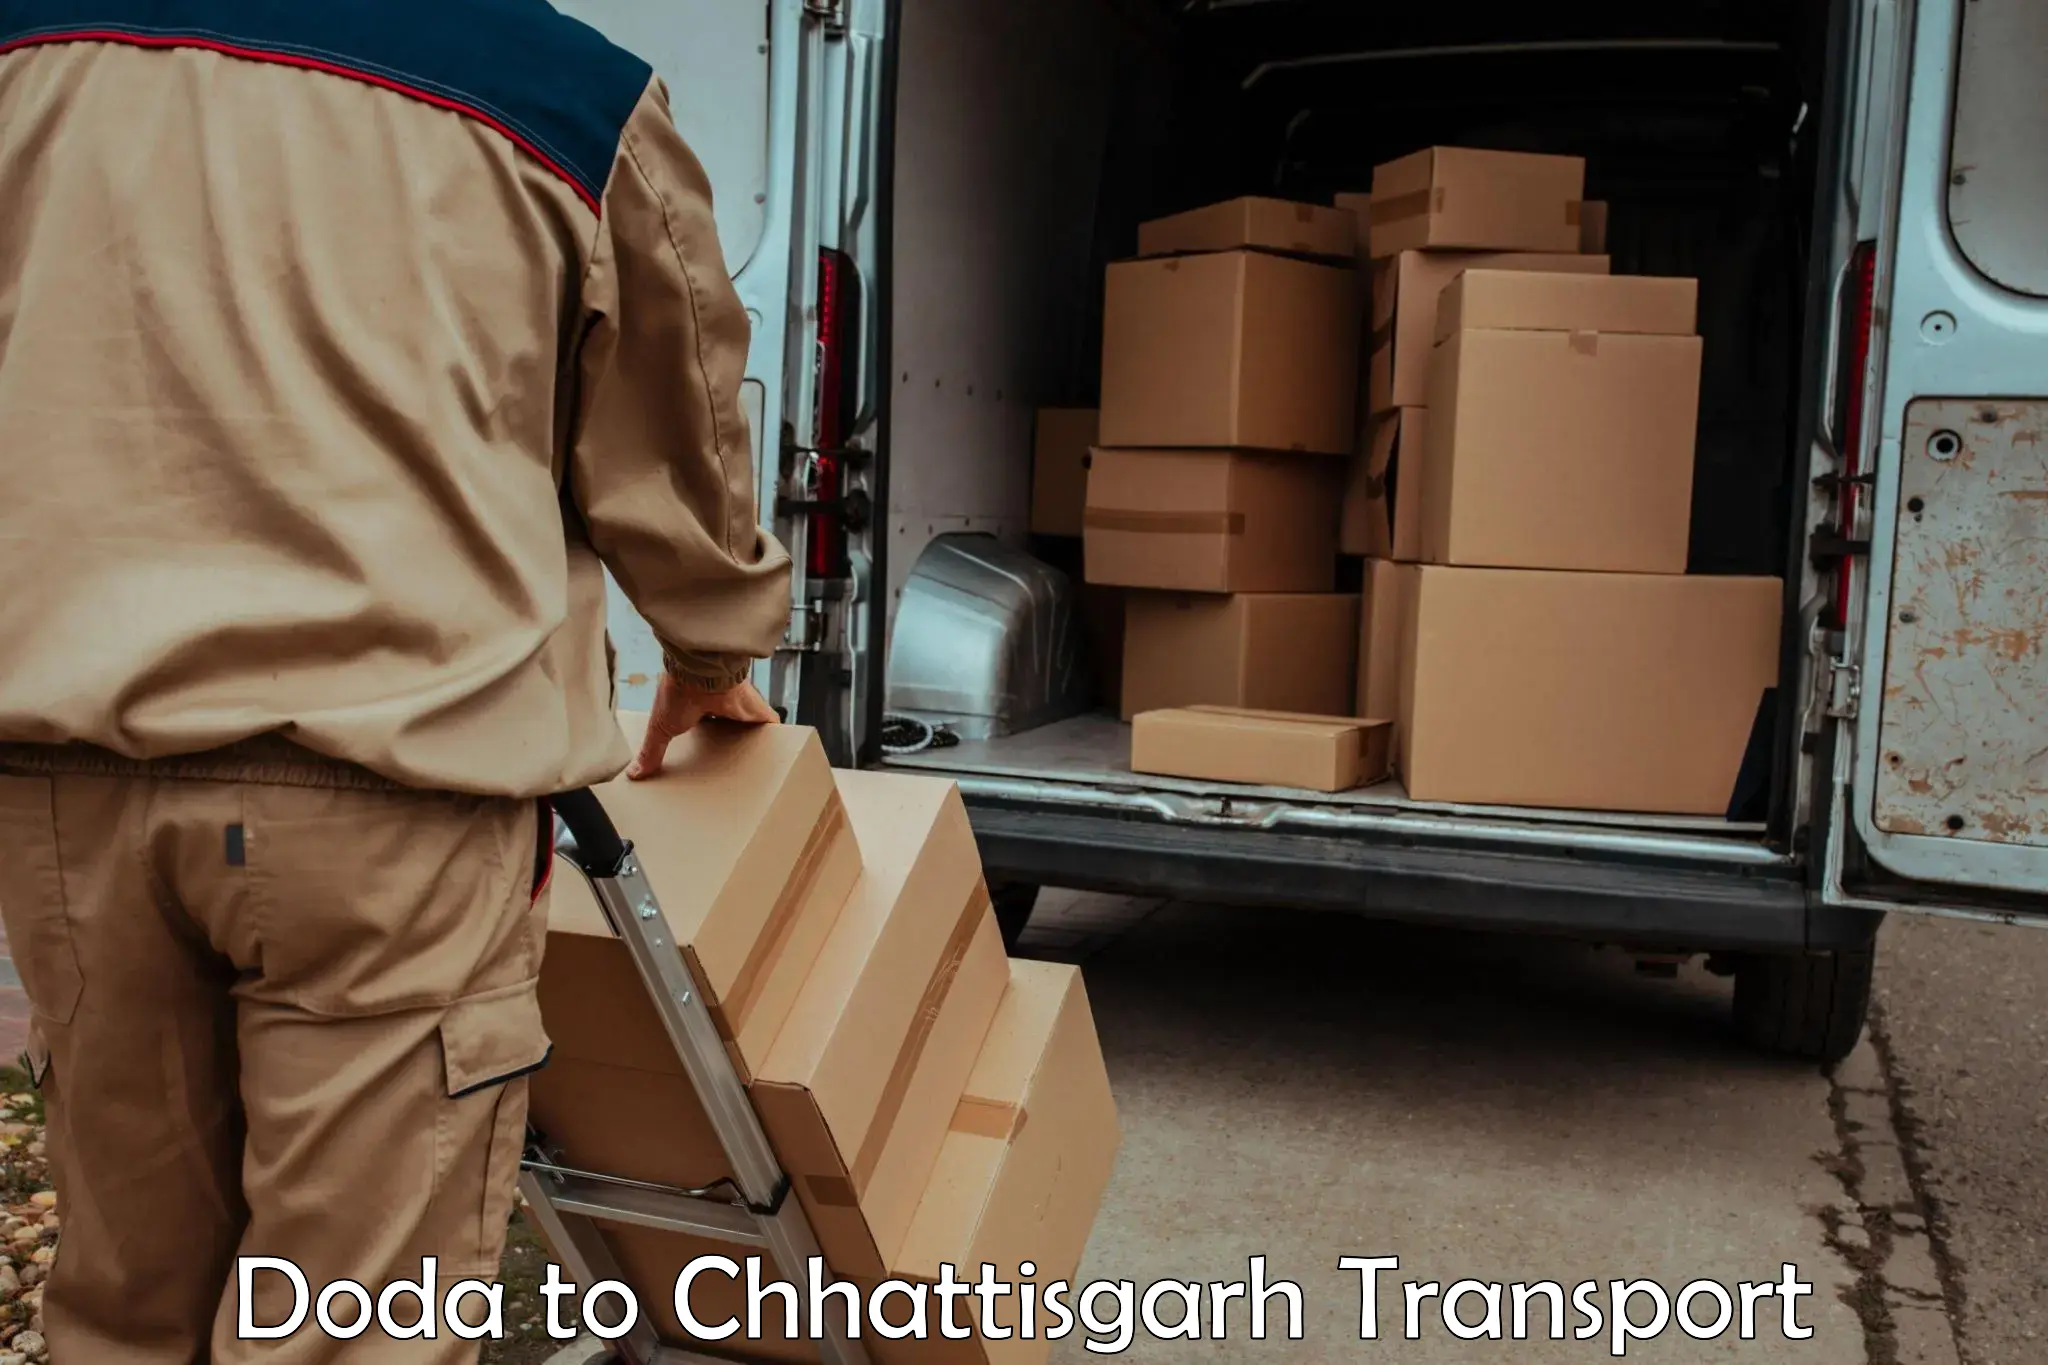 Commercial transport service Doda to Patna Chhattisgarh